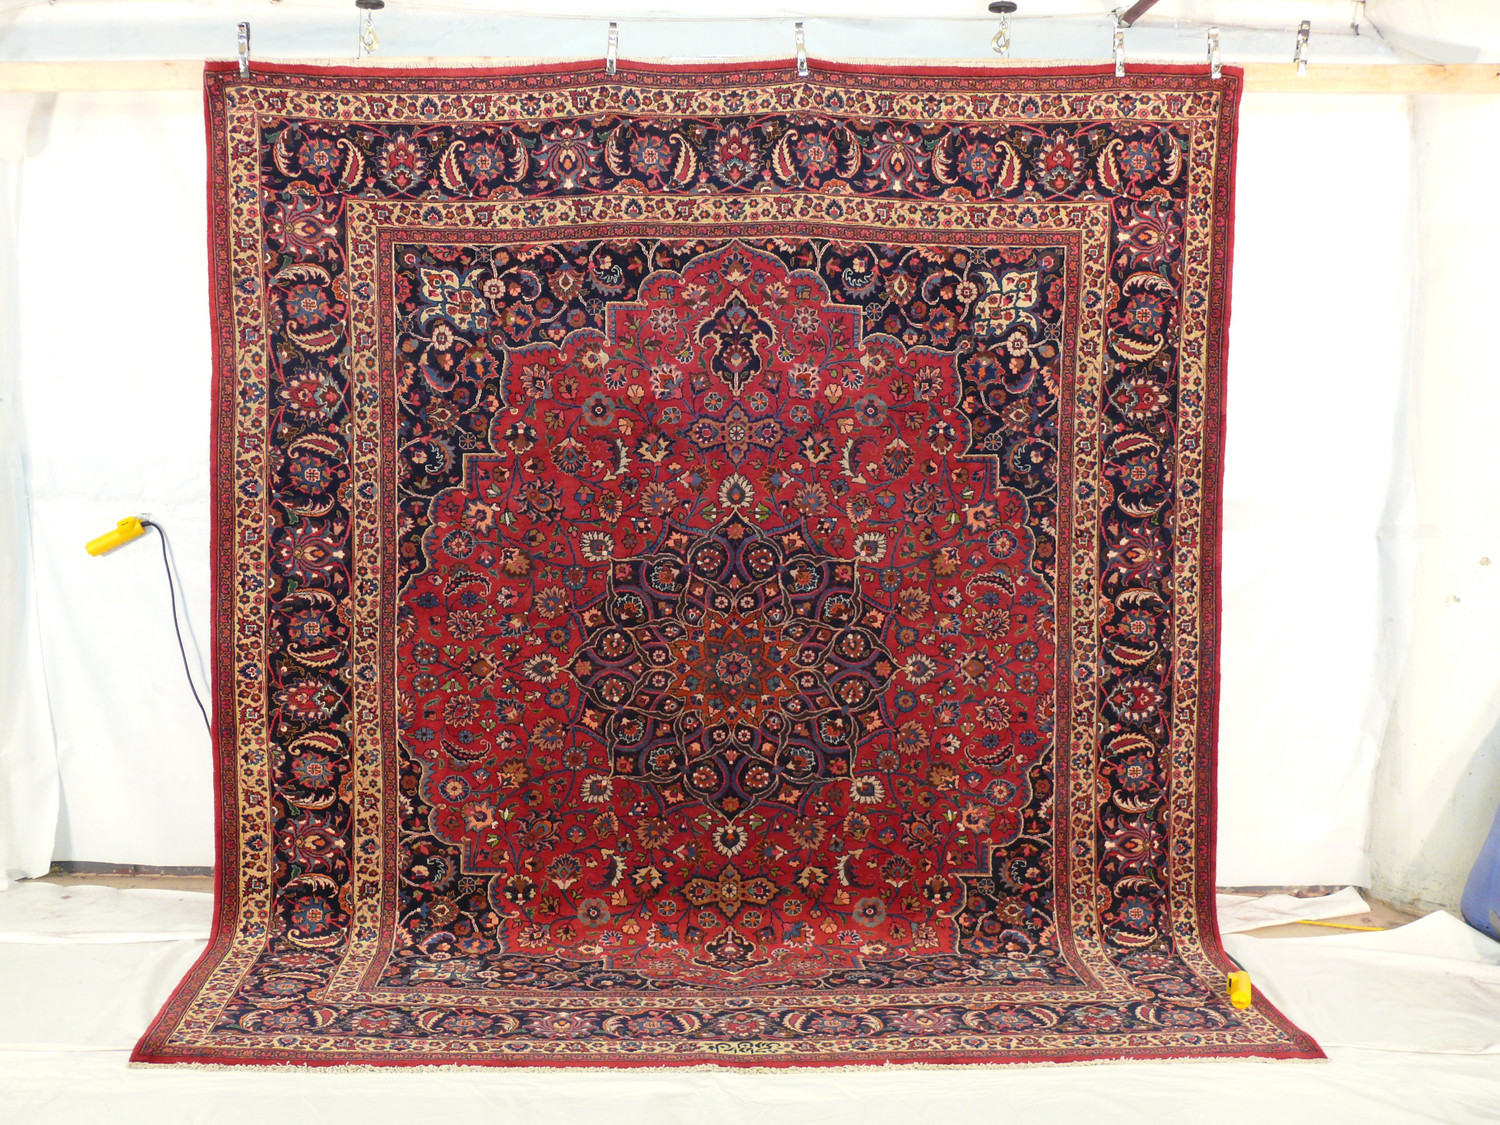 10 x 11'6 Persian Mashad Square-ish Rug with signature of master weaver